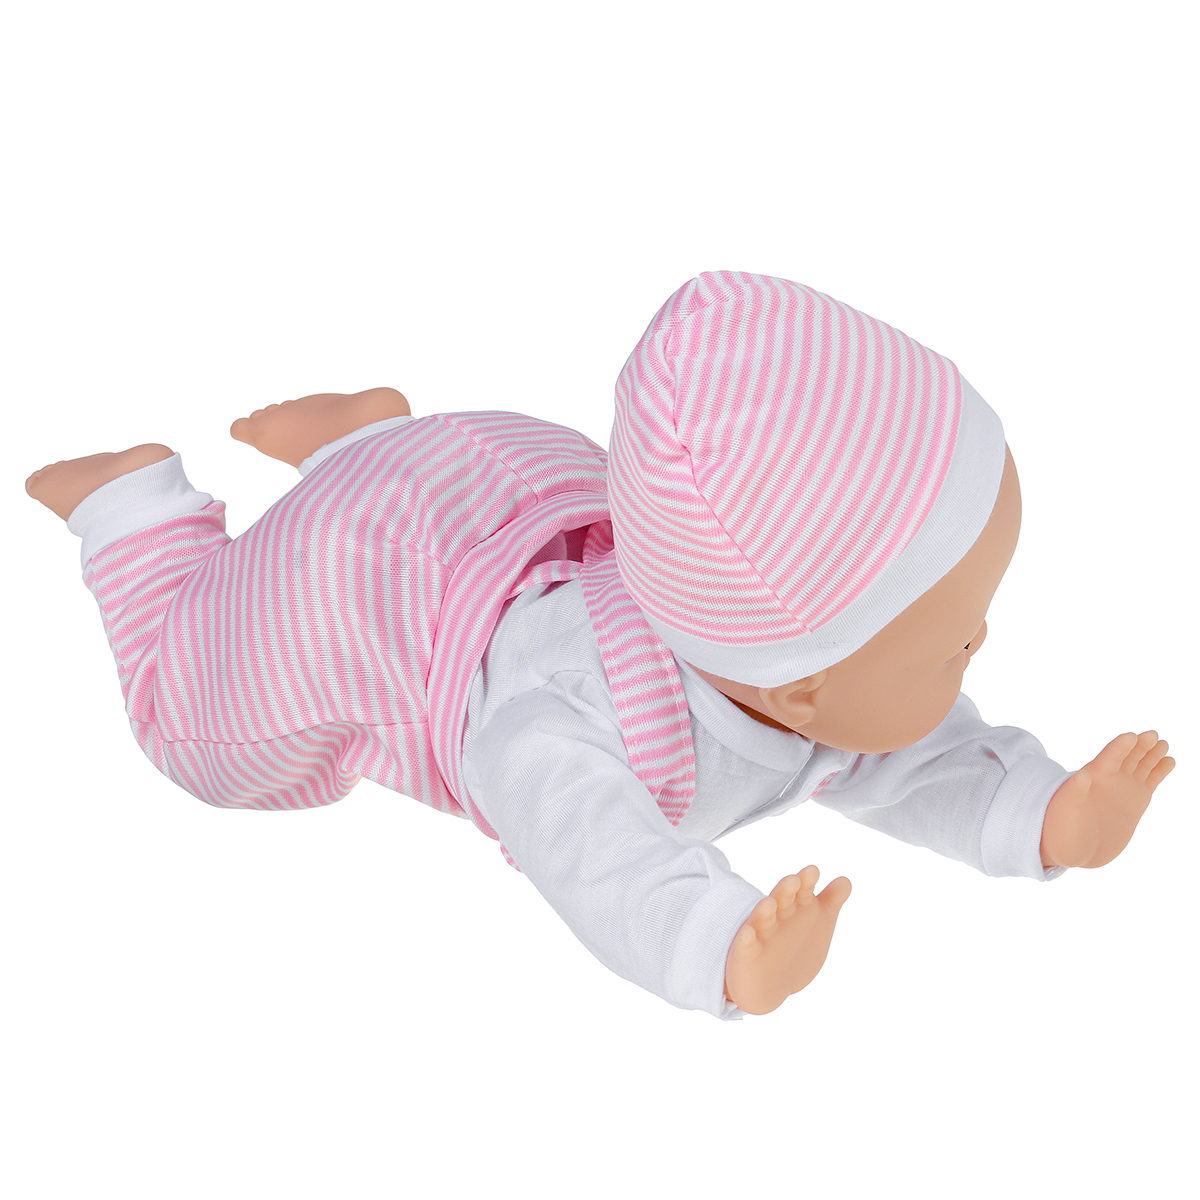 13Inch-Simulation-Vinyl-Doll-Crawling-Doll-Baby-Crawling-Toddler-Simulation-Doll-Childrens-Toys-1818658-9